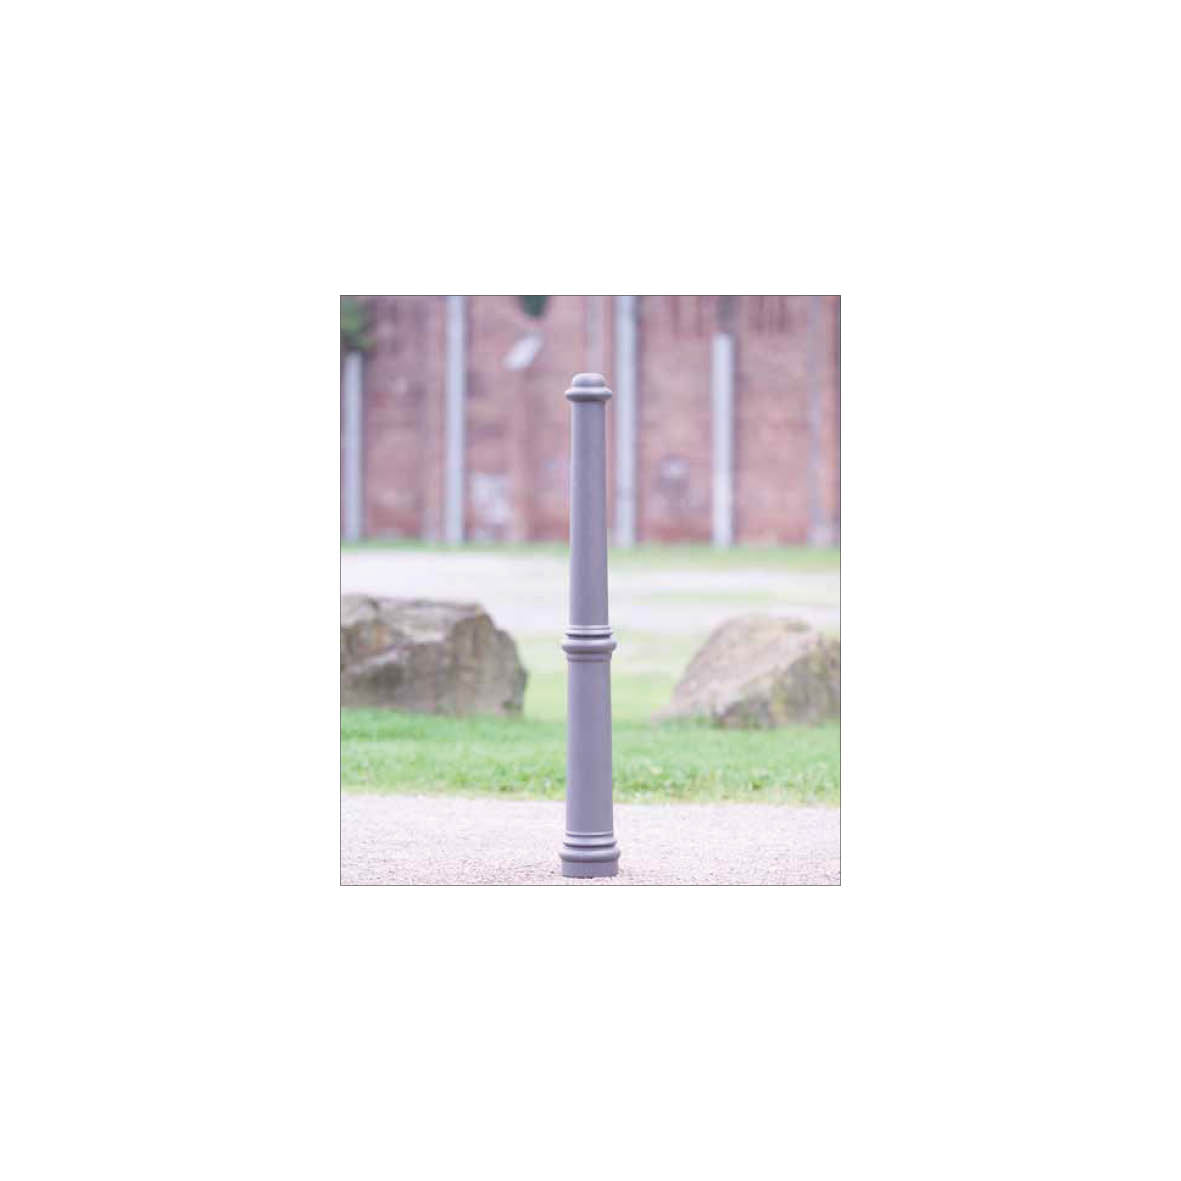 Stilpoller Alu, Antik E, herausnehmbar, 90 cm